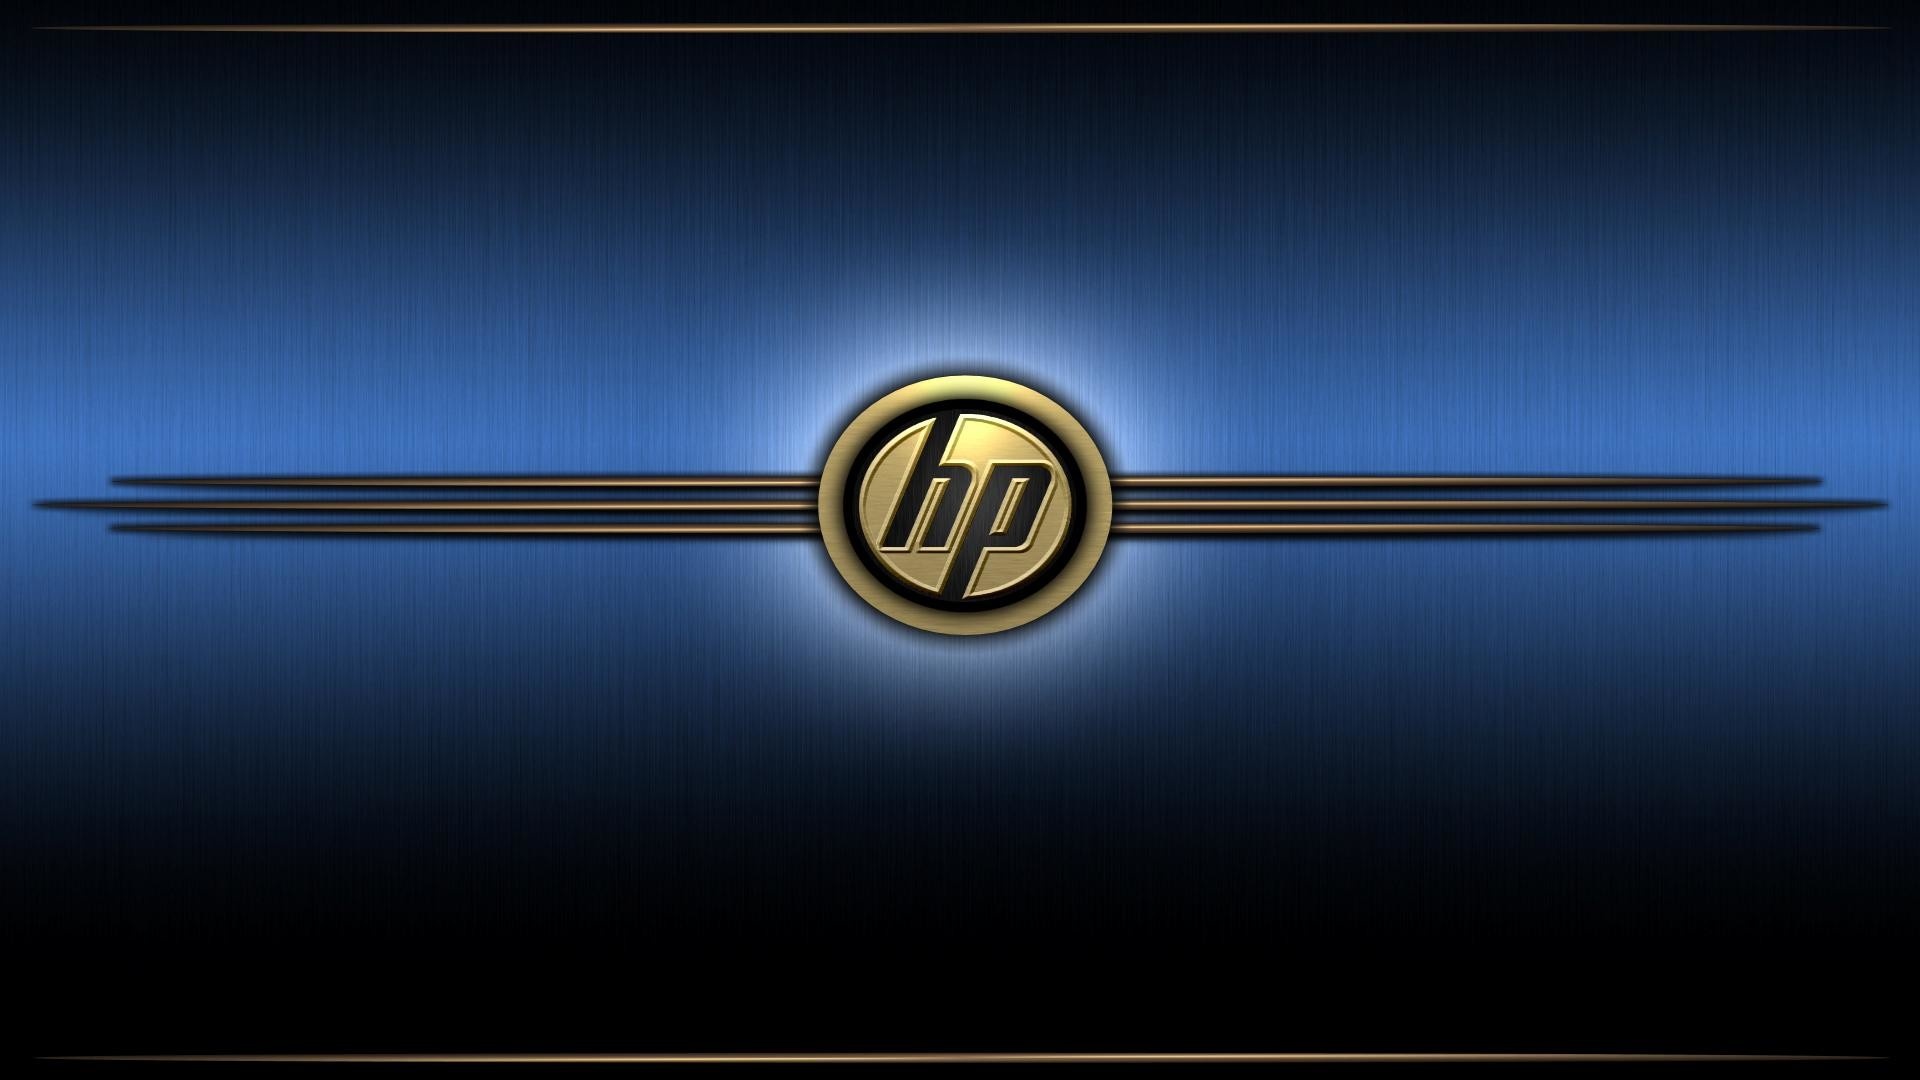 HP, HP wallpapers, Trumpwallpapers, HP logo, 1920x1080 Full HD Desktop